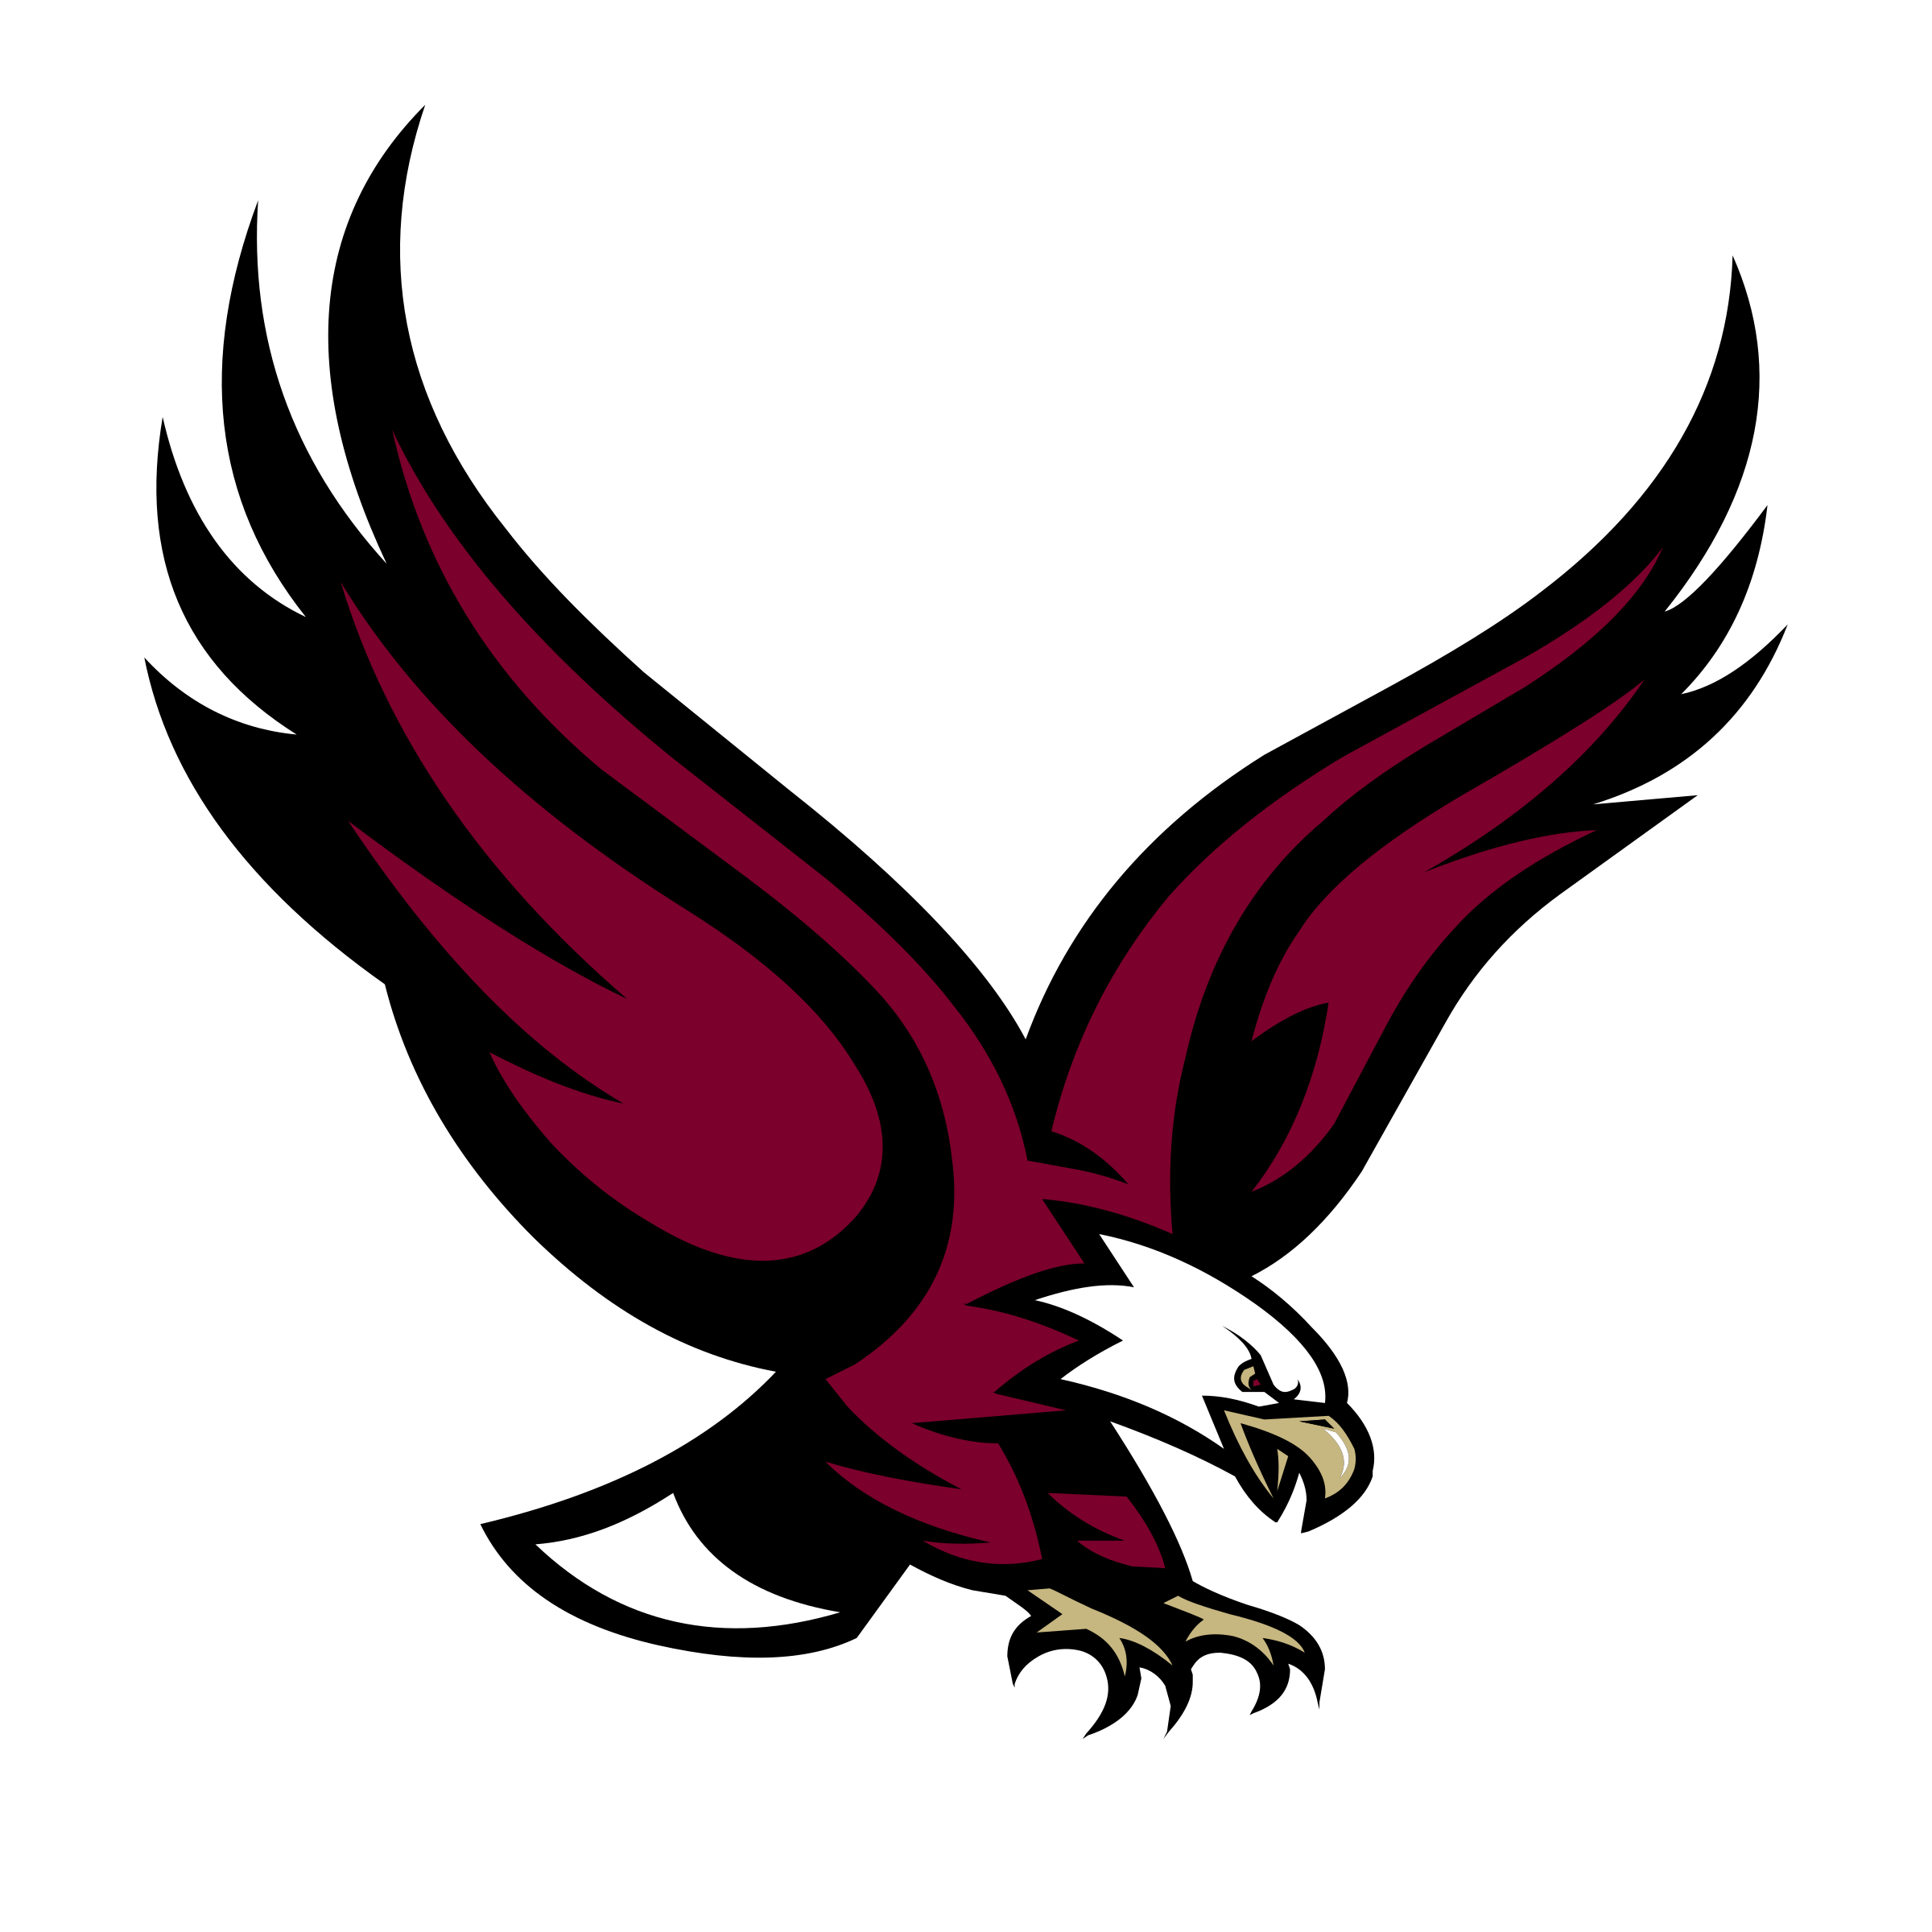 Black and Red Eagle Logo - Boston College Eagles 02 Logo PNG Transparent & SVG Vector